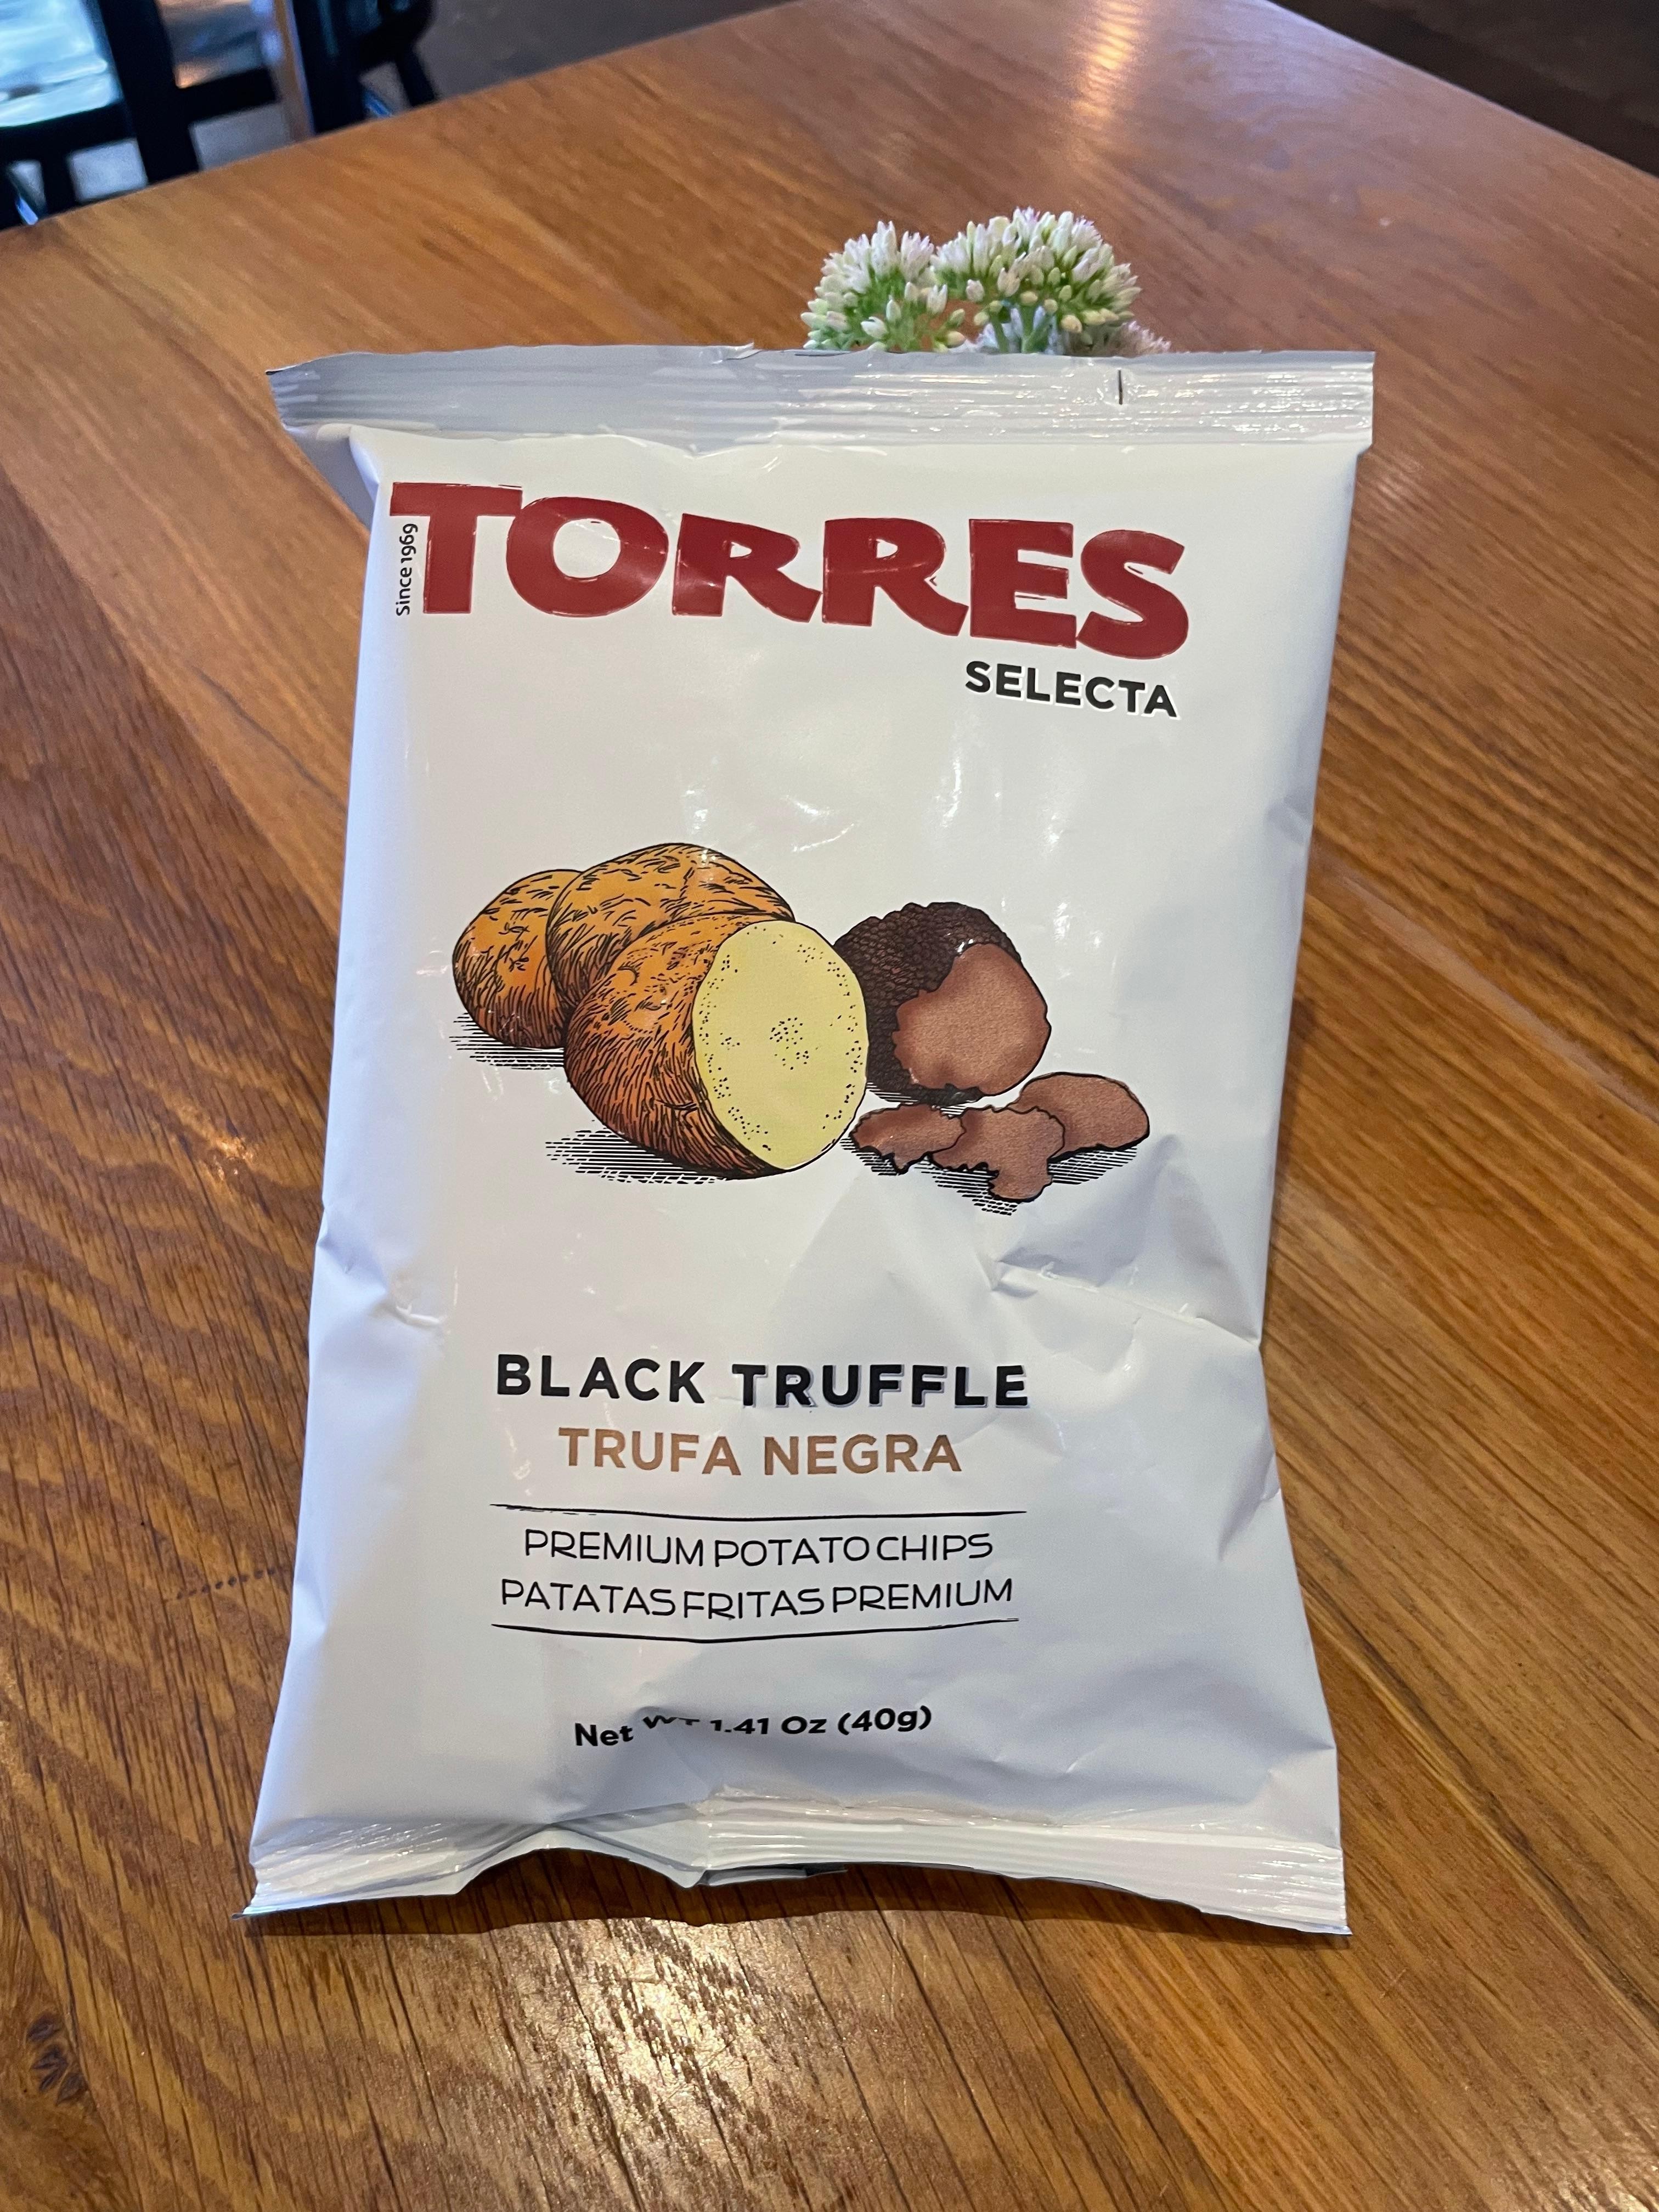 Torres Selecta "Black Truffle Chips"